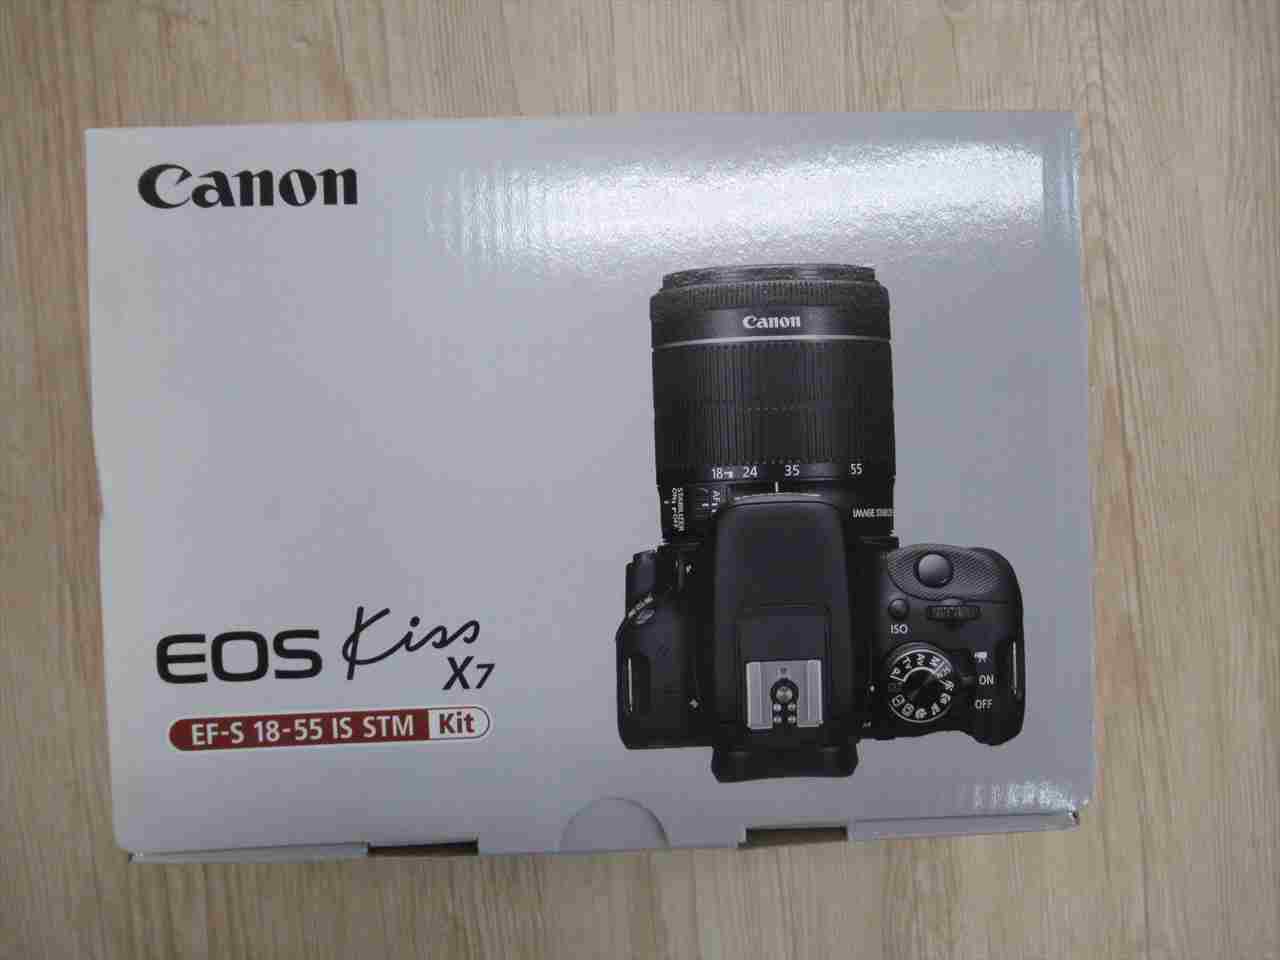 CANON EOS Kiss X7 EF-S 18-55 IS SYM Kitの買取実績 | 買取大吉大分店